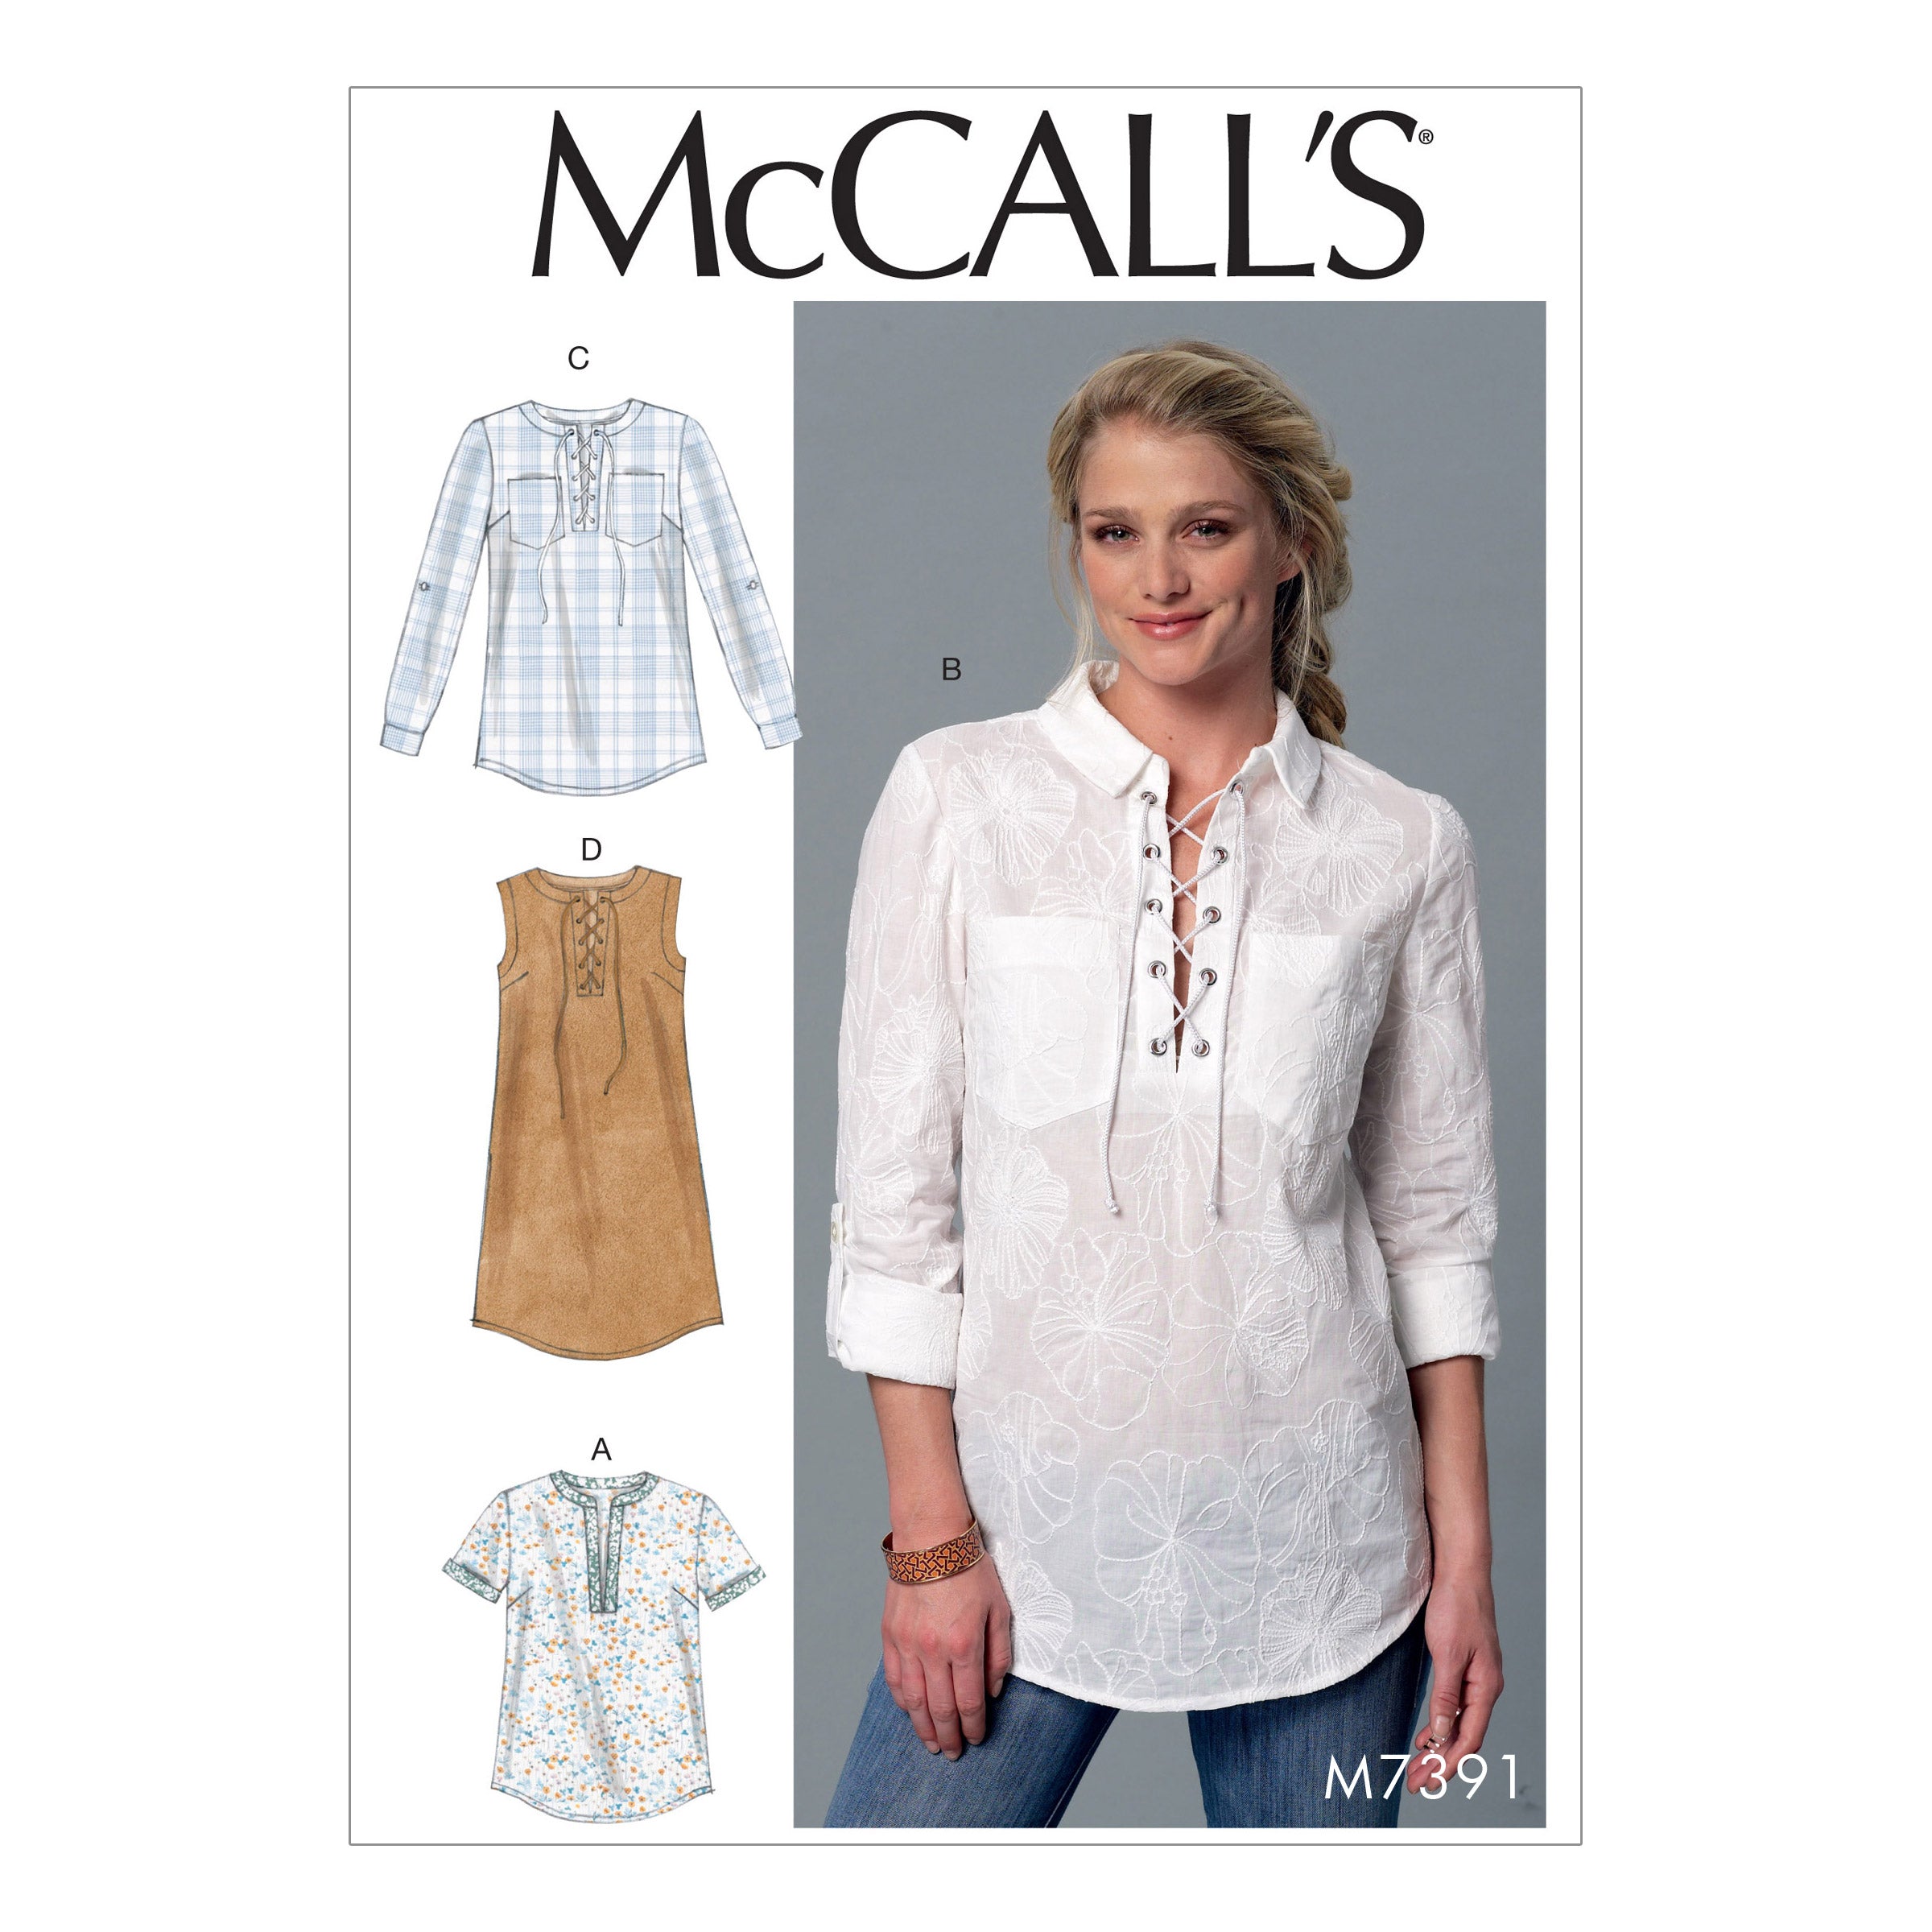 McCalls Tops and Dress M7391